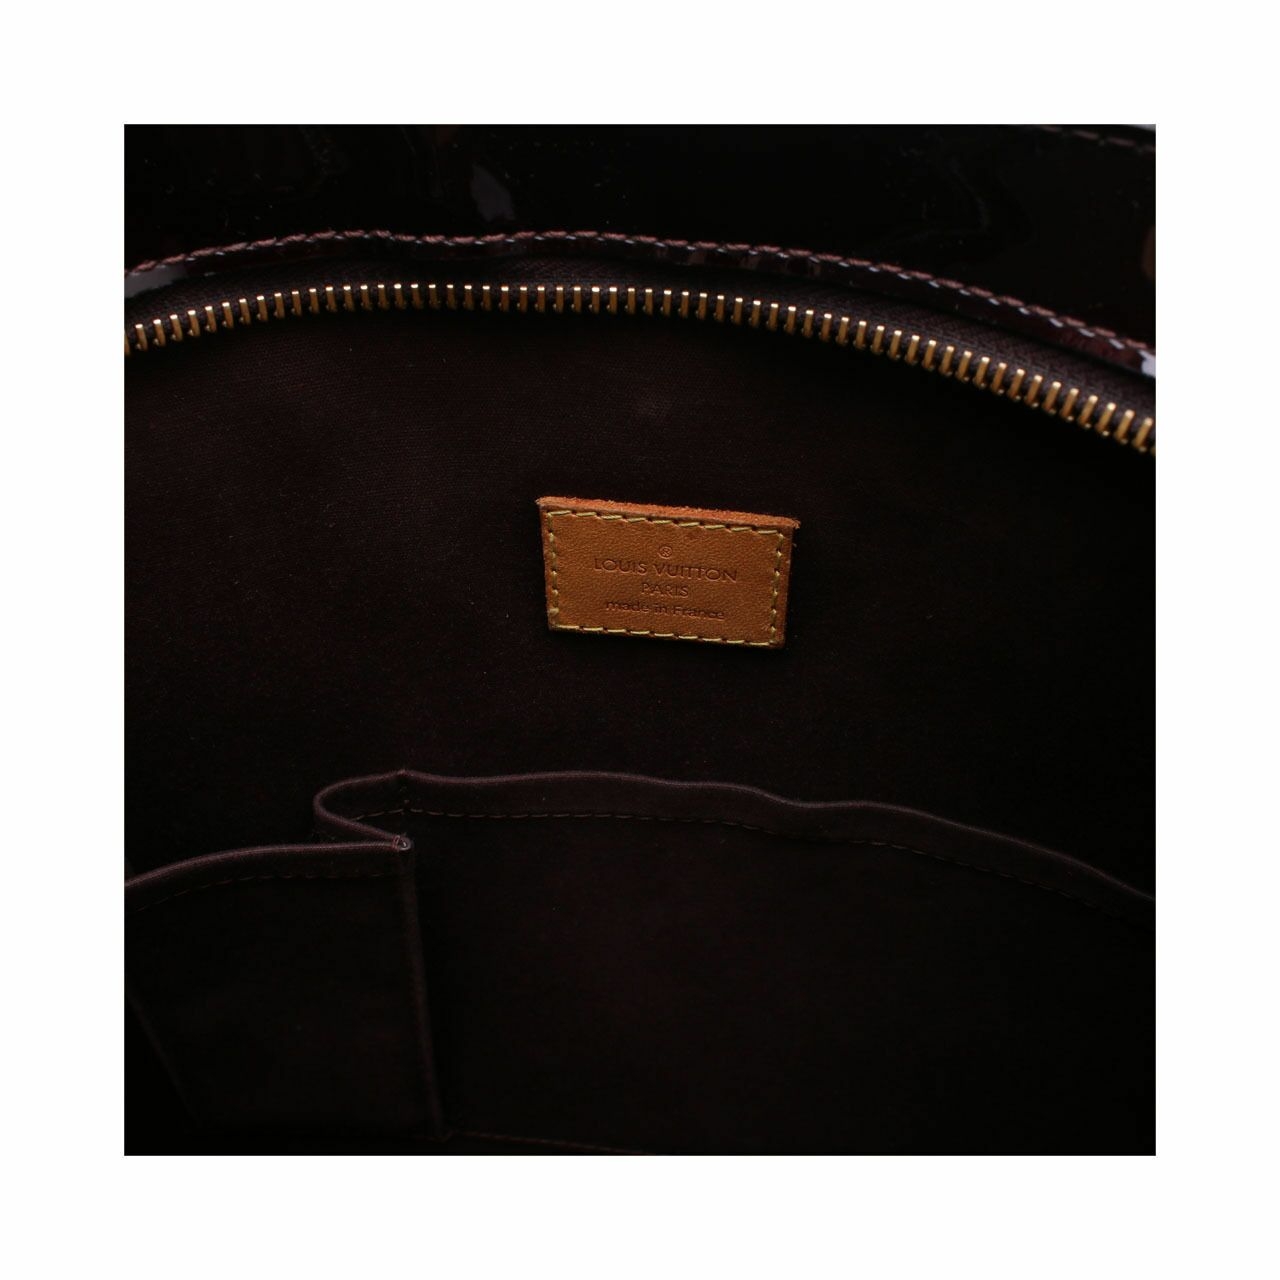 Louis Vuitton Burgundy Tote Bag